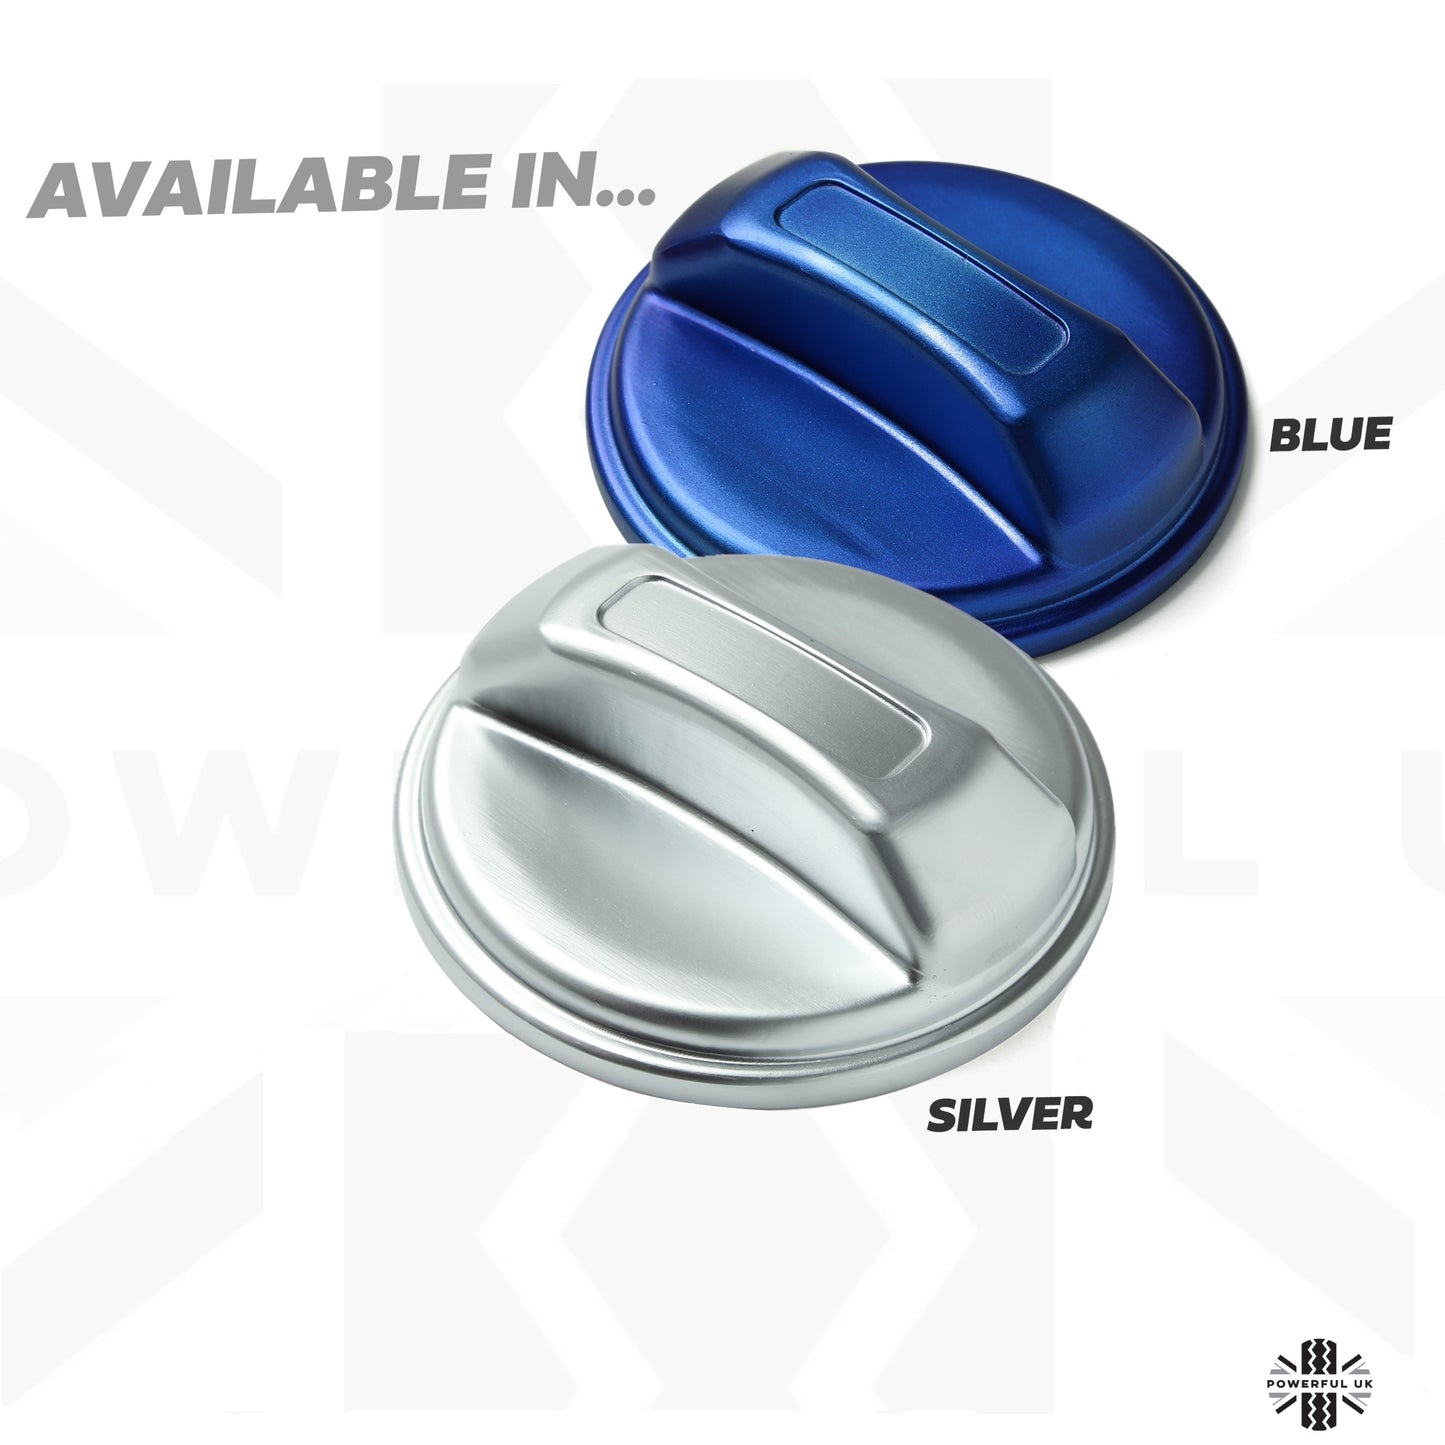 Fuel Filler Cap Cover - Petrol (Vented) - Blue - for Jaguar XF